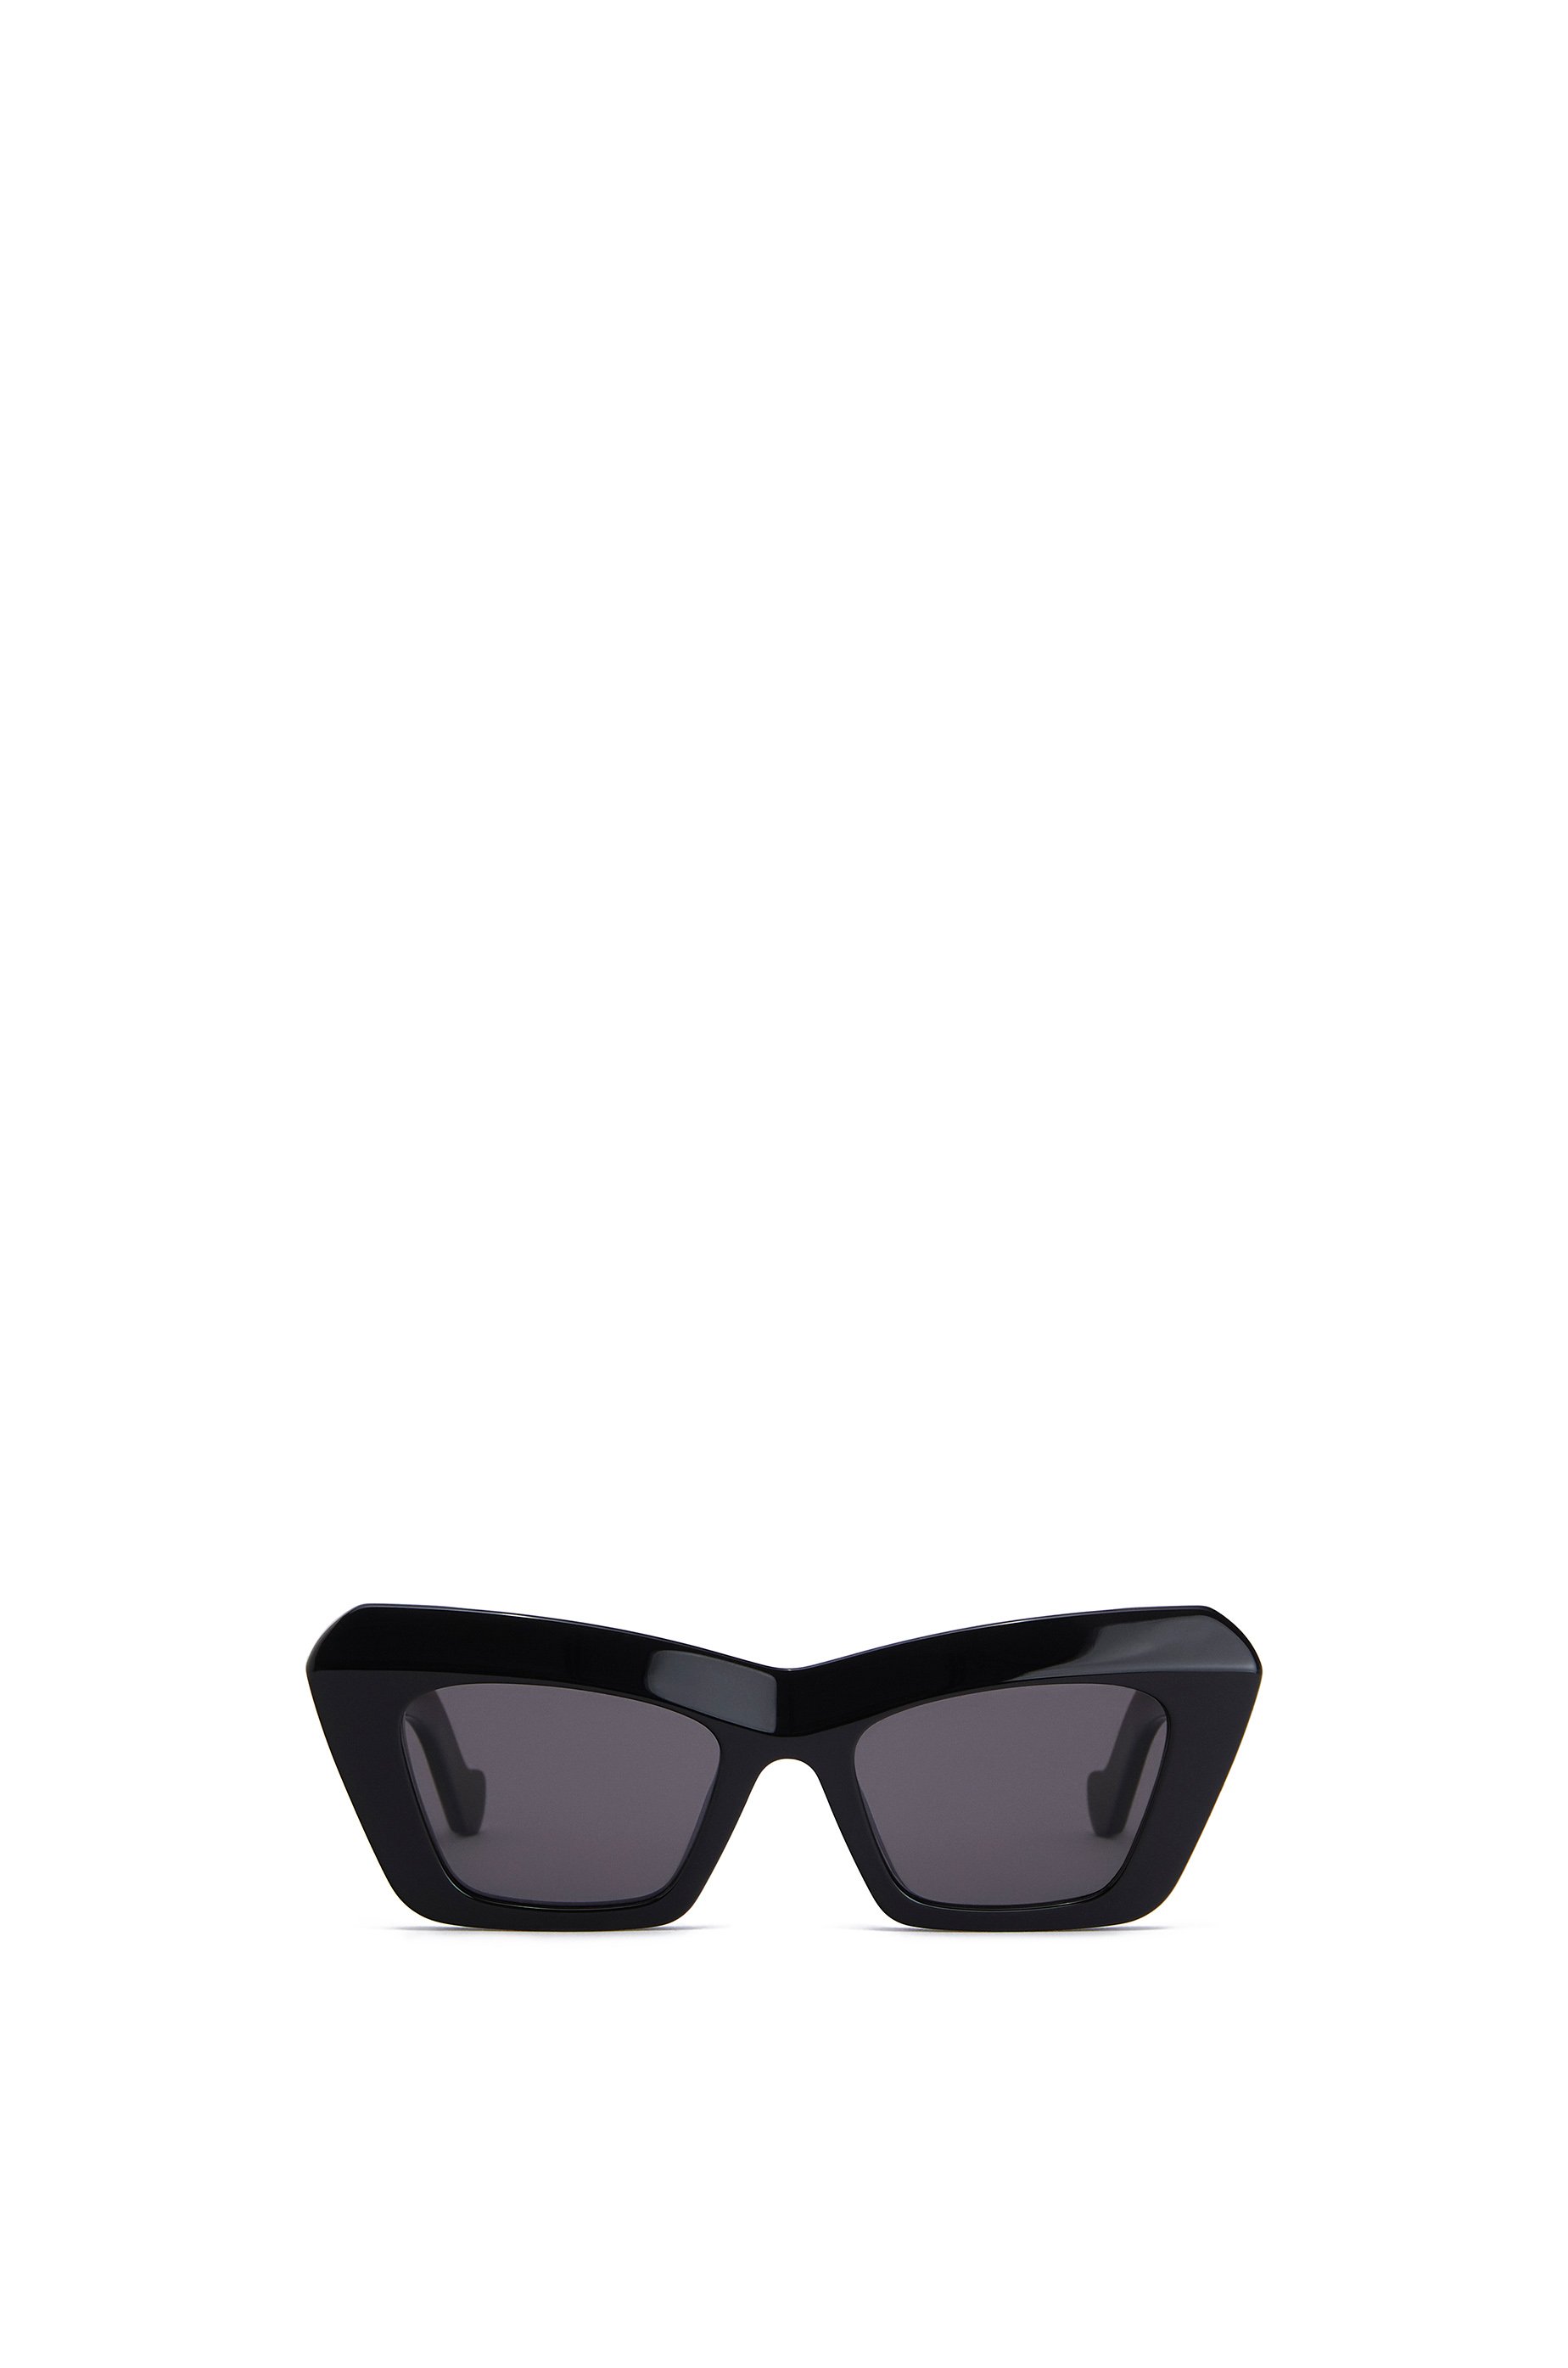 Loewe - Cateye Sunglasses in Acetate for Woman - Black - Acetate